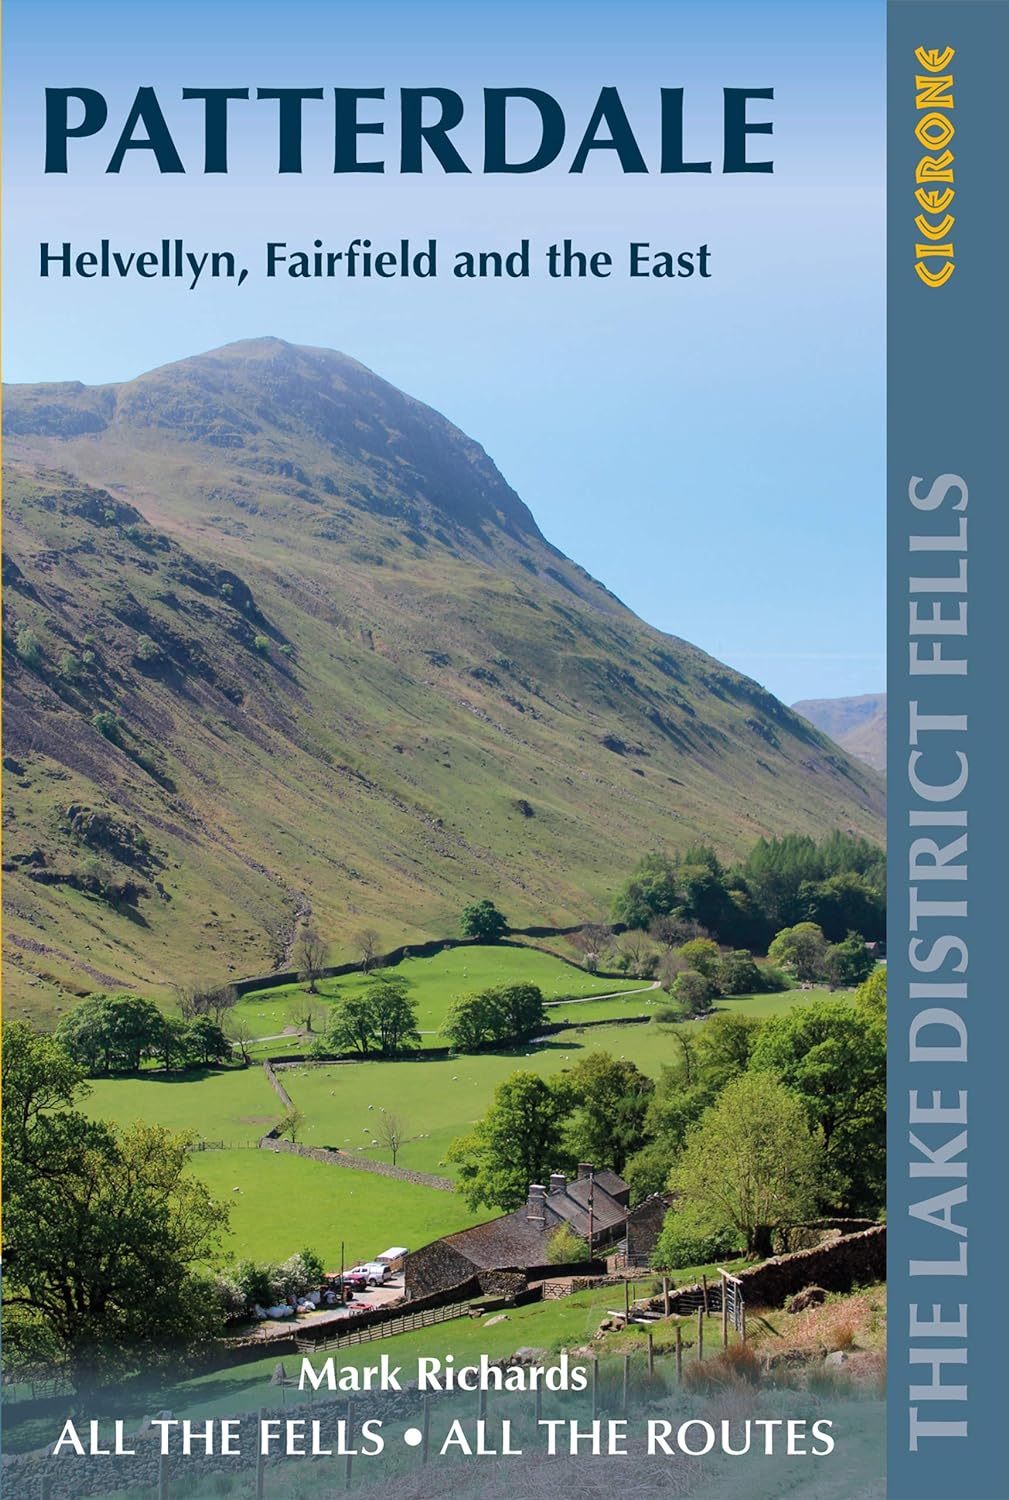 Patterdale - Walking the Lake District Fells